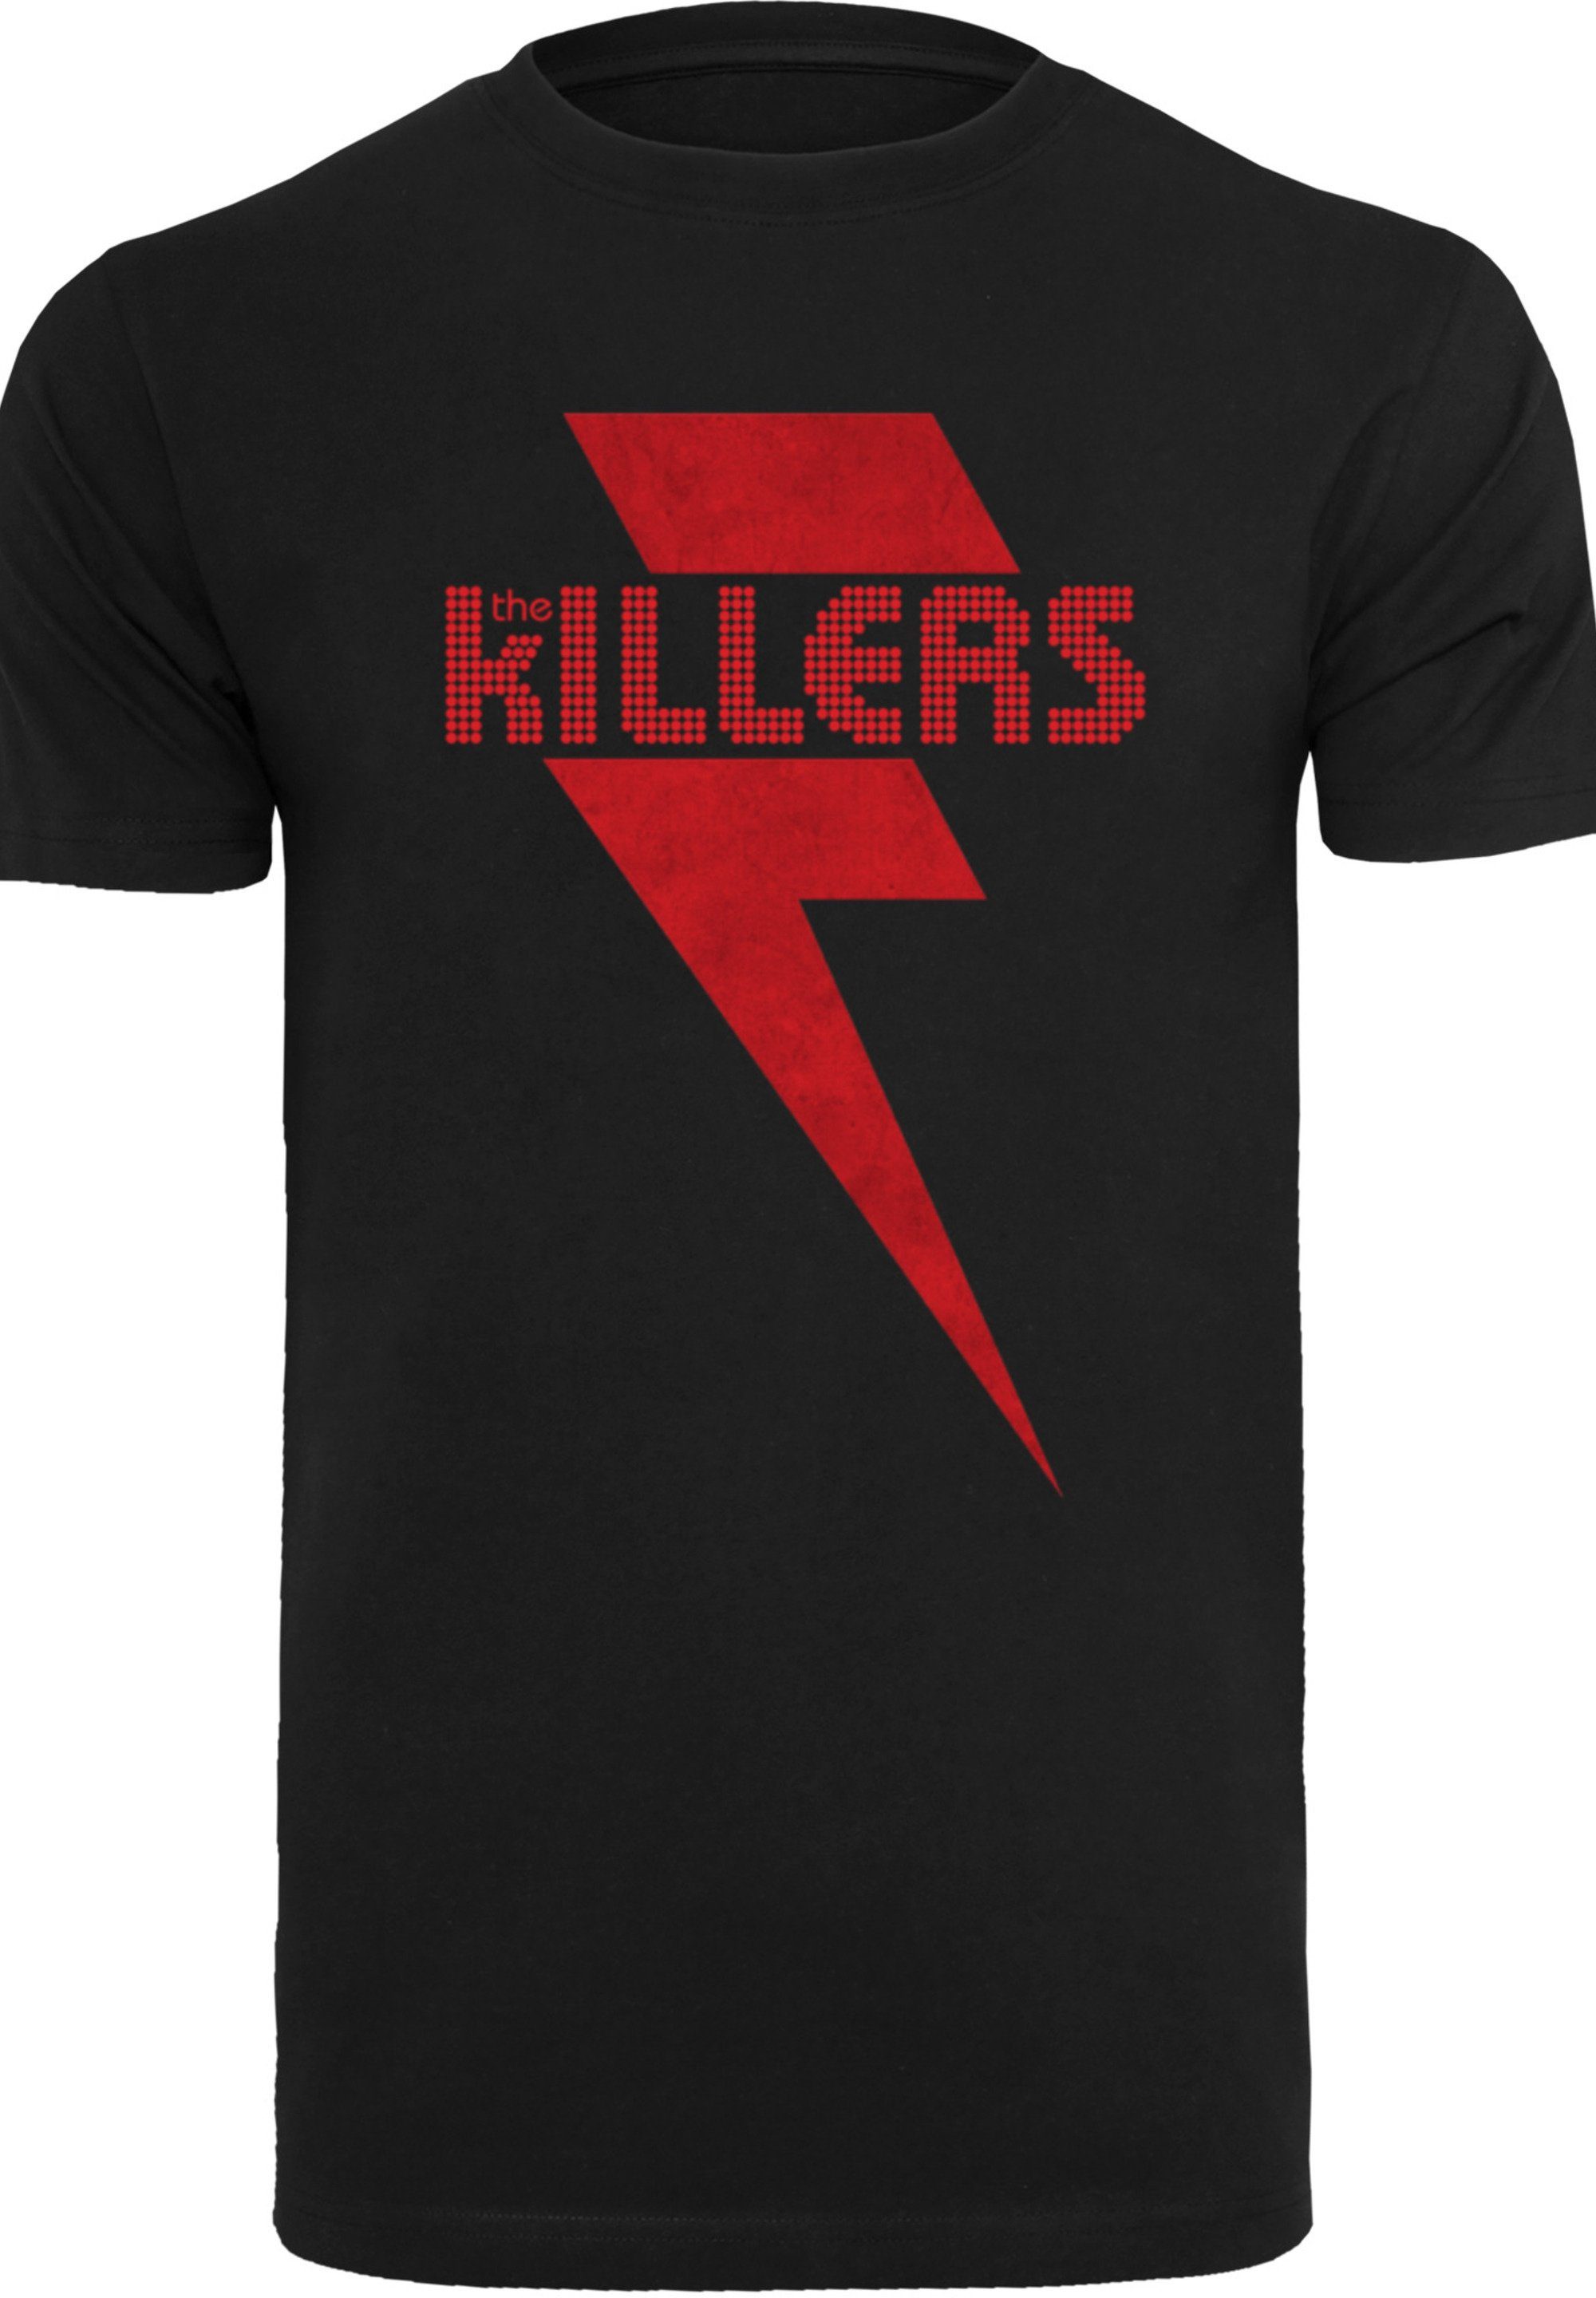 The T-Shirt Killers schwarz Bolt Print F4NT4STIC Red